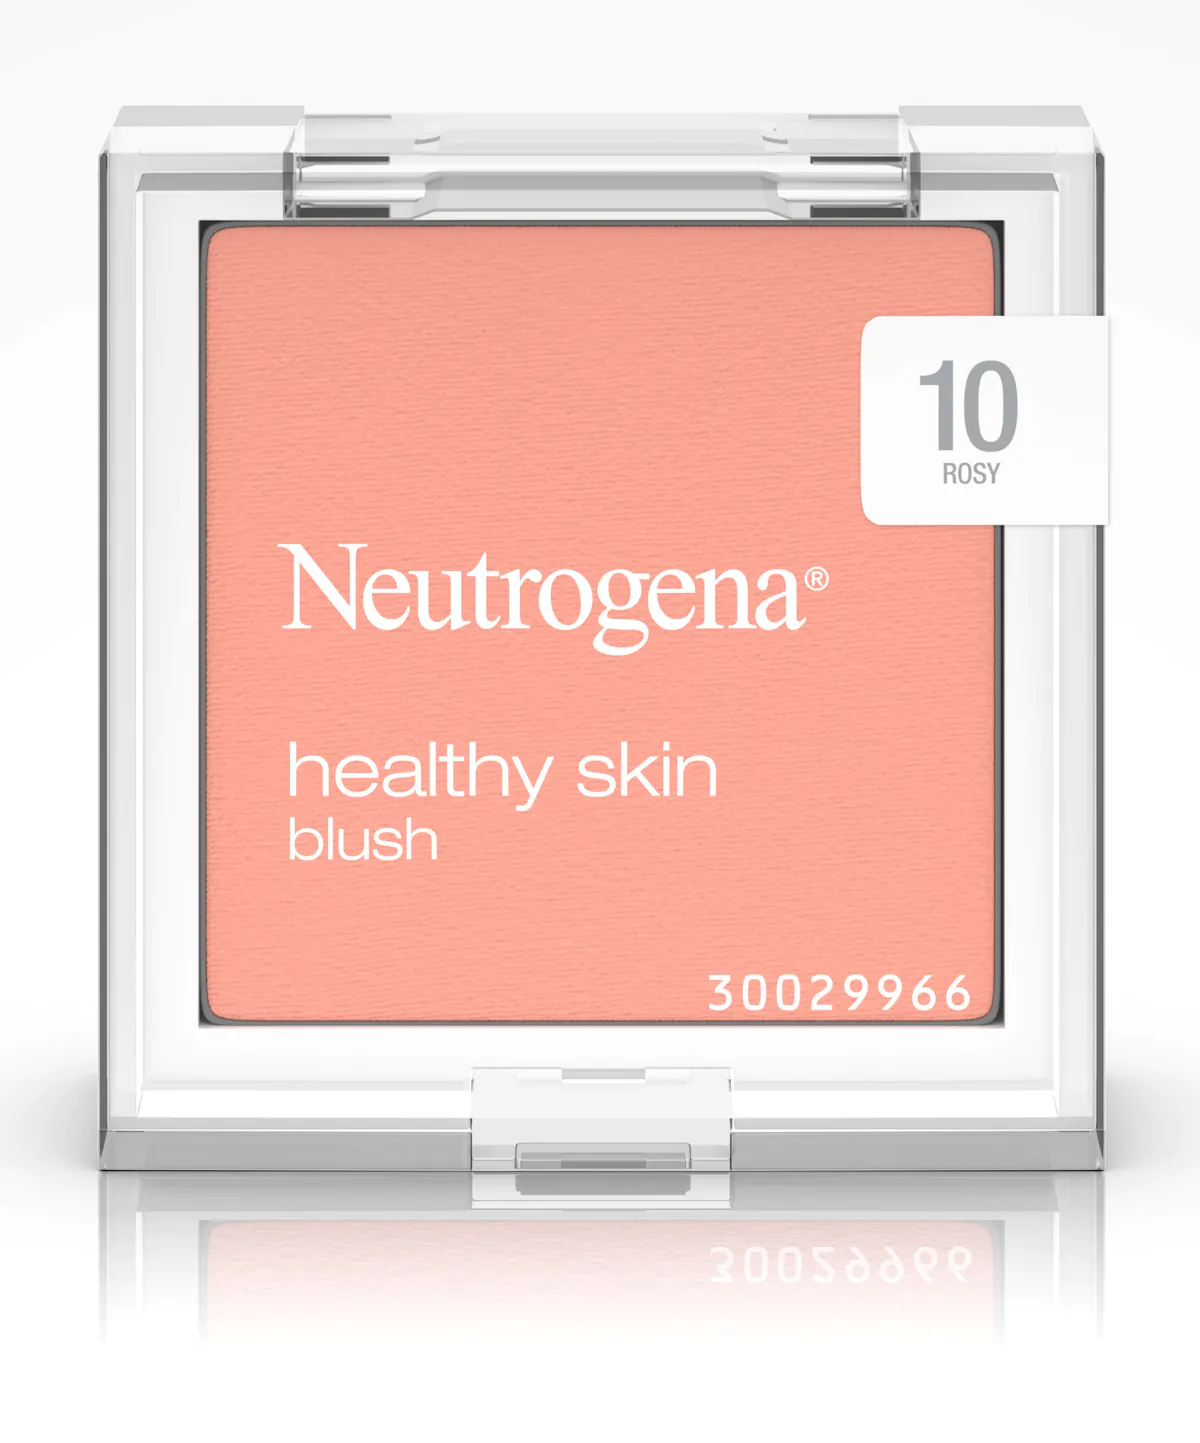 Neutrogena Healthy Skin Powder Blush Makeup Palette